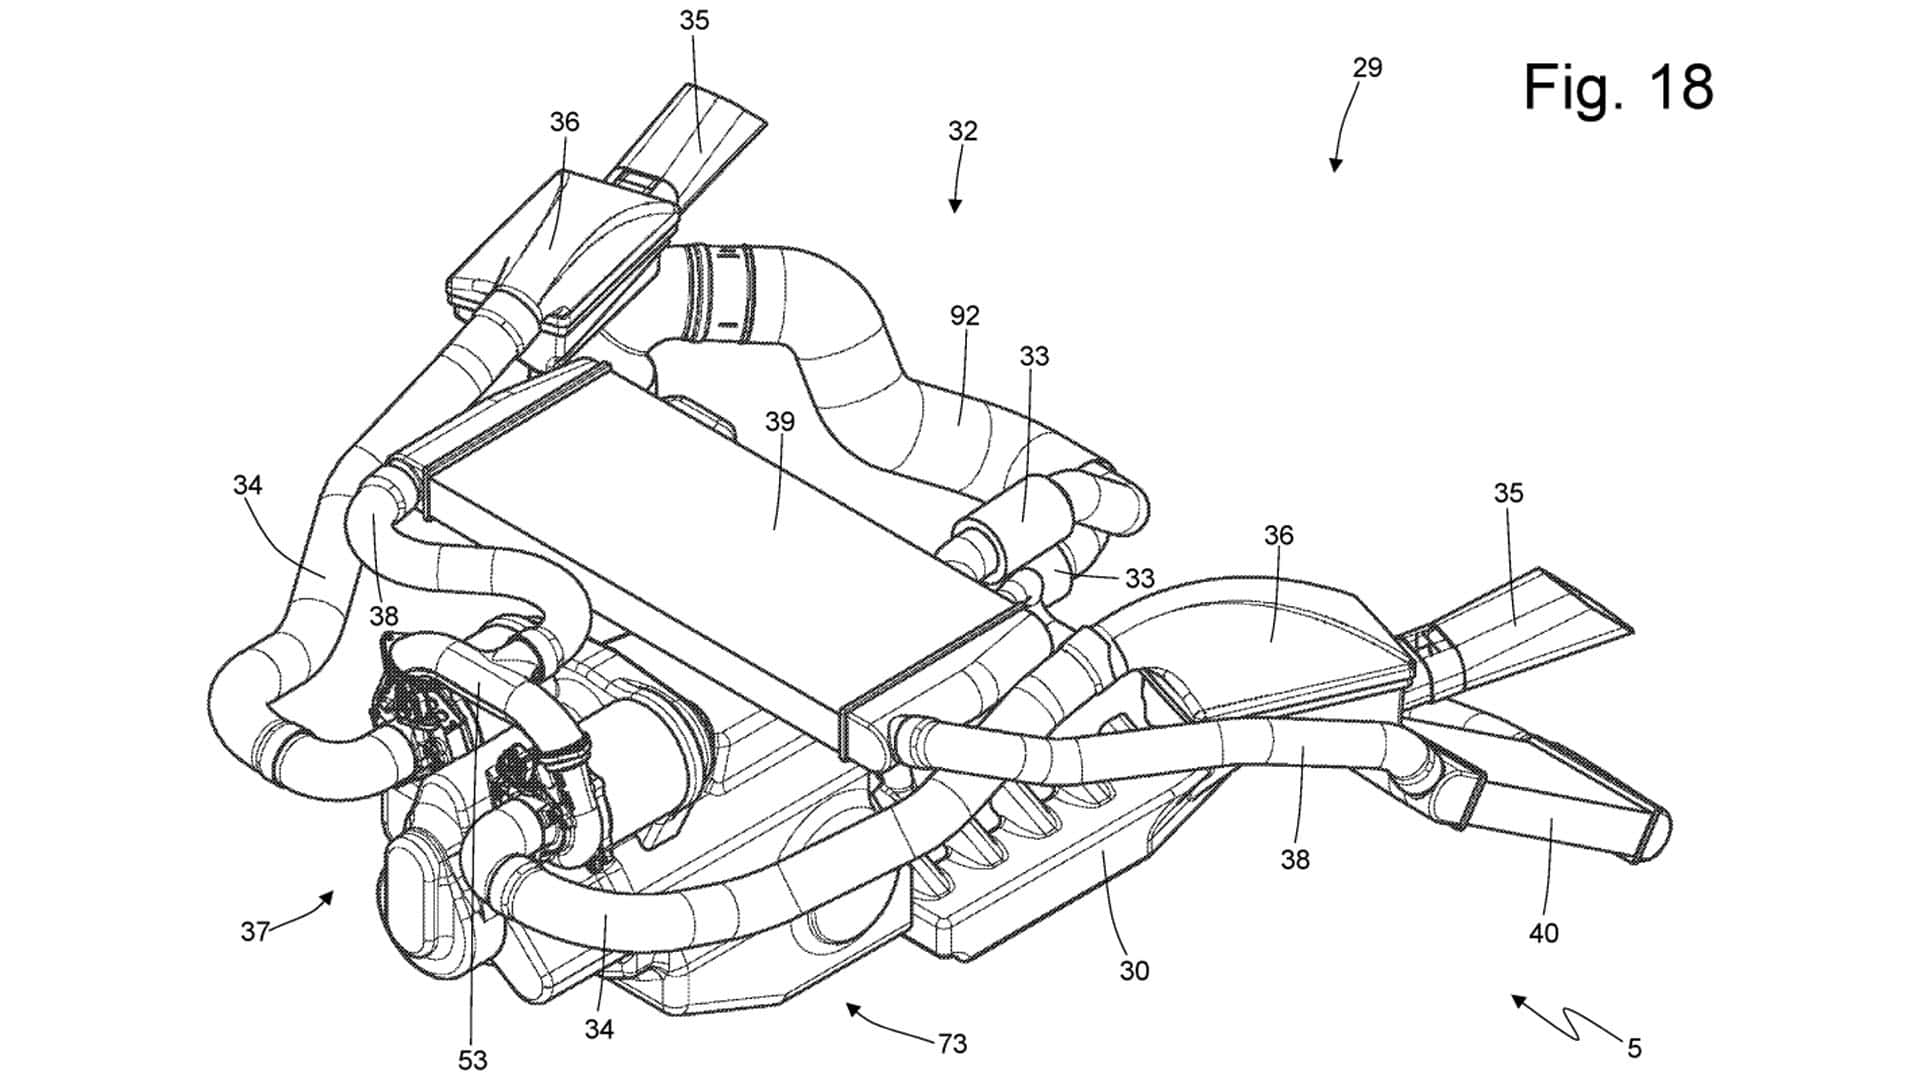 Patente de motor Ferrari